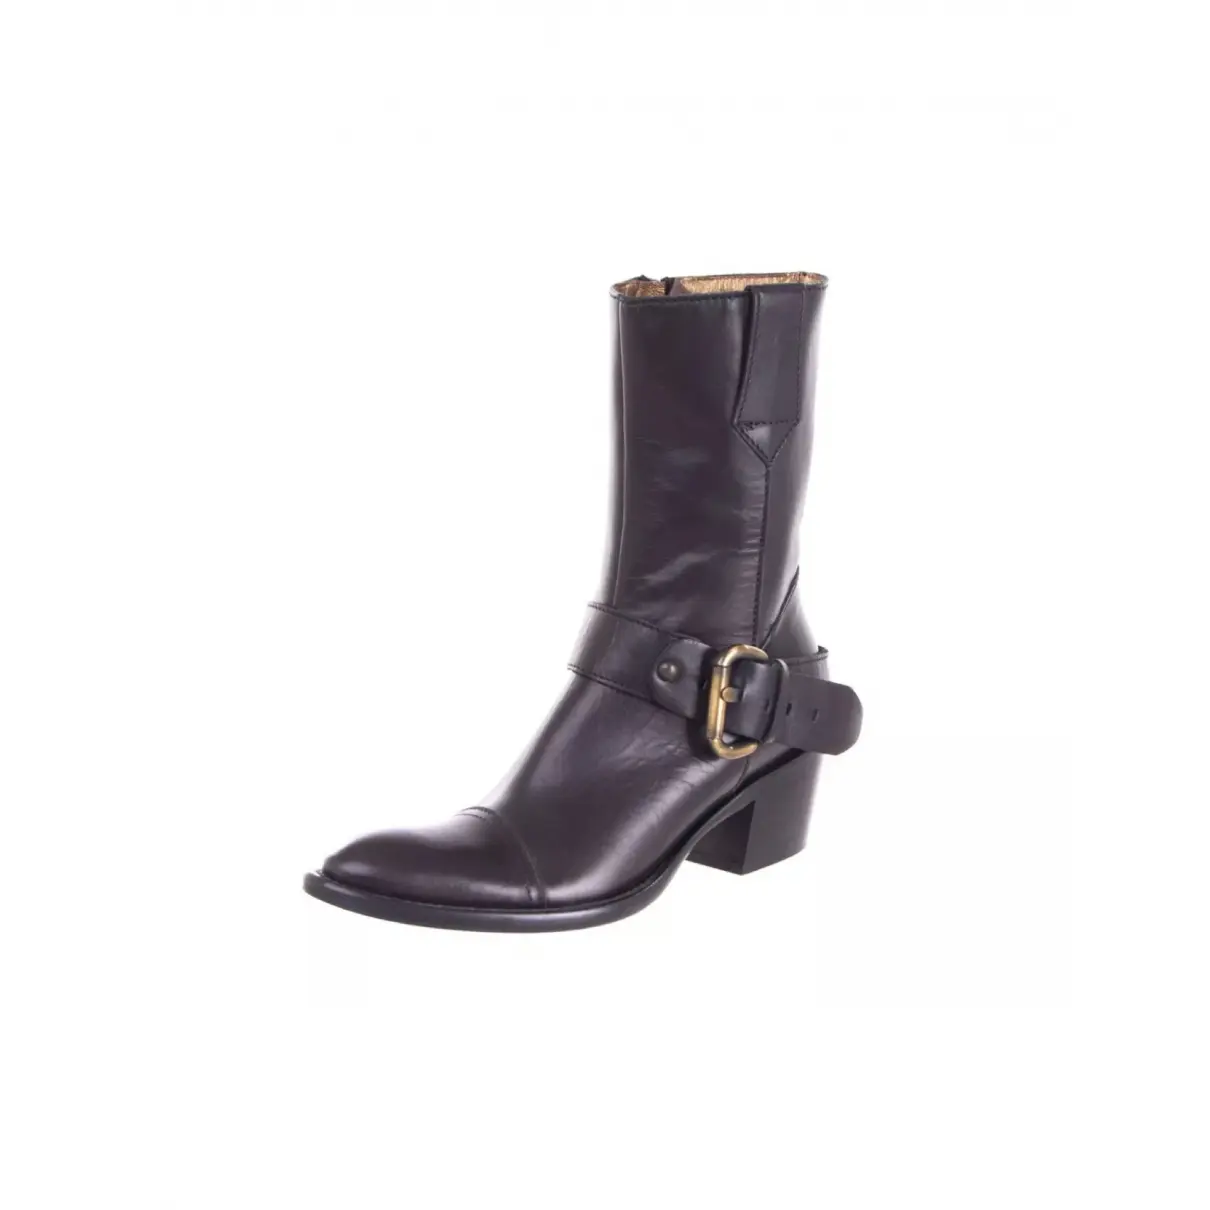 Leather western boots Guglielmo Rotta